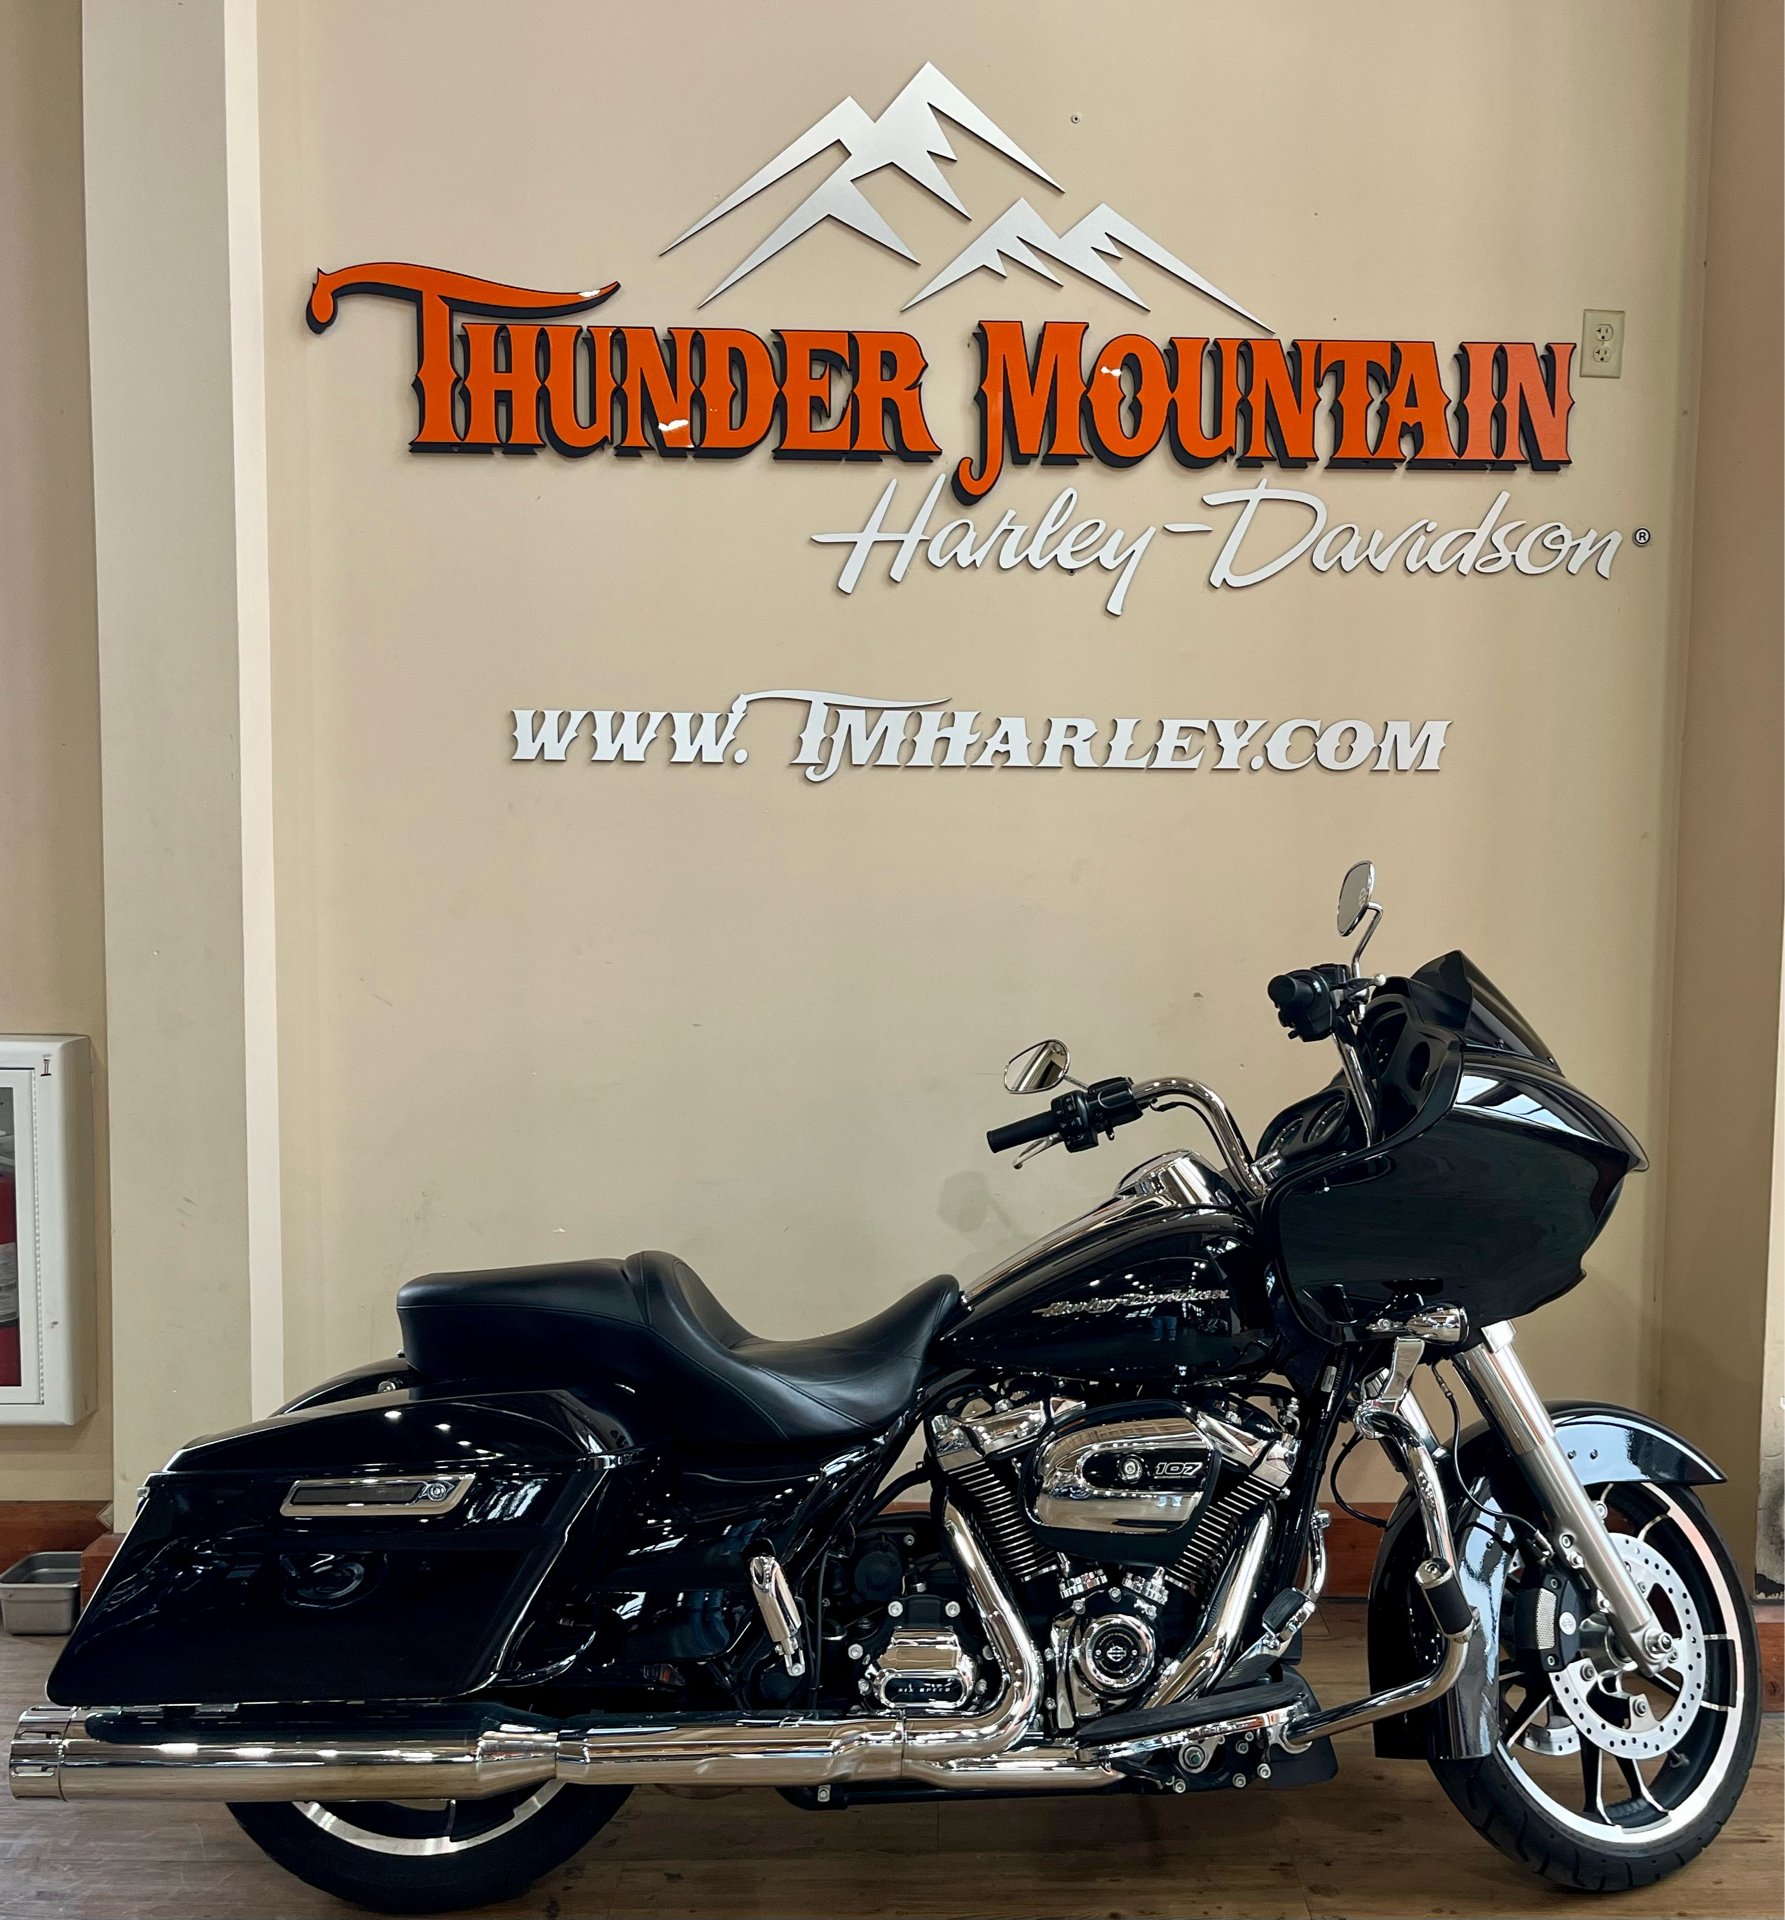 2020 Harley-Davidson Road Glide® in Loveland, Colorado - Photo 1